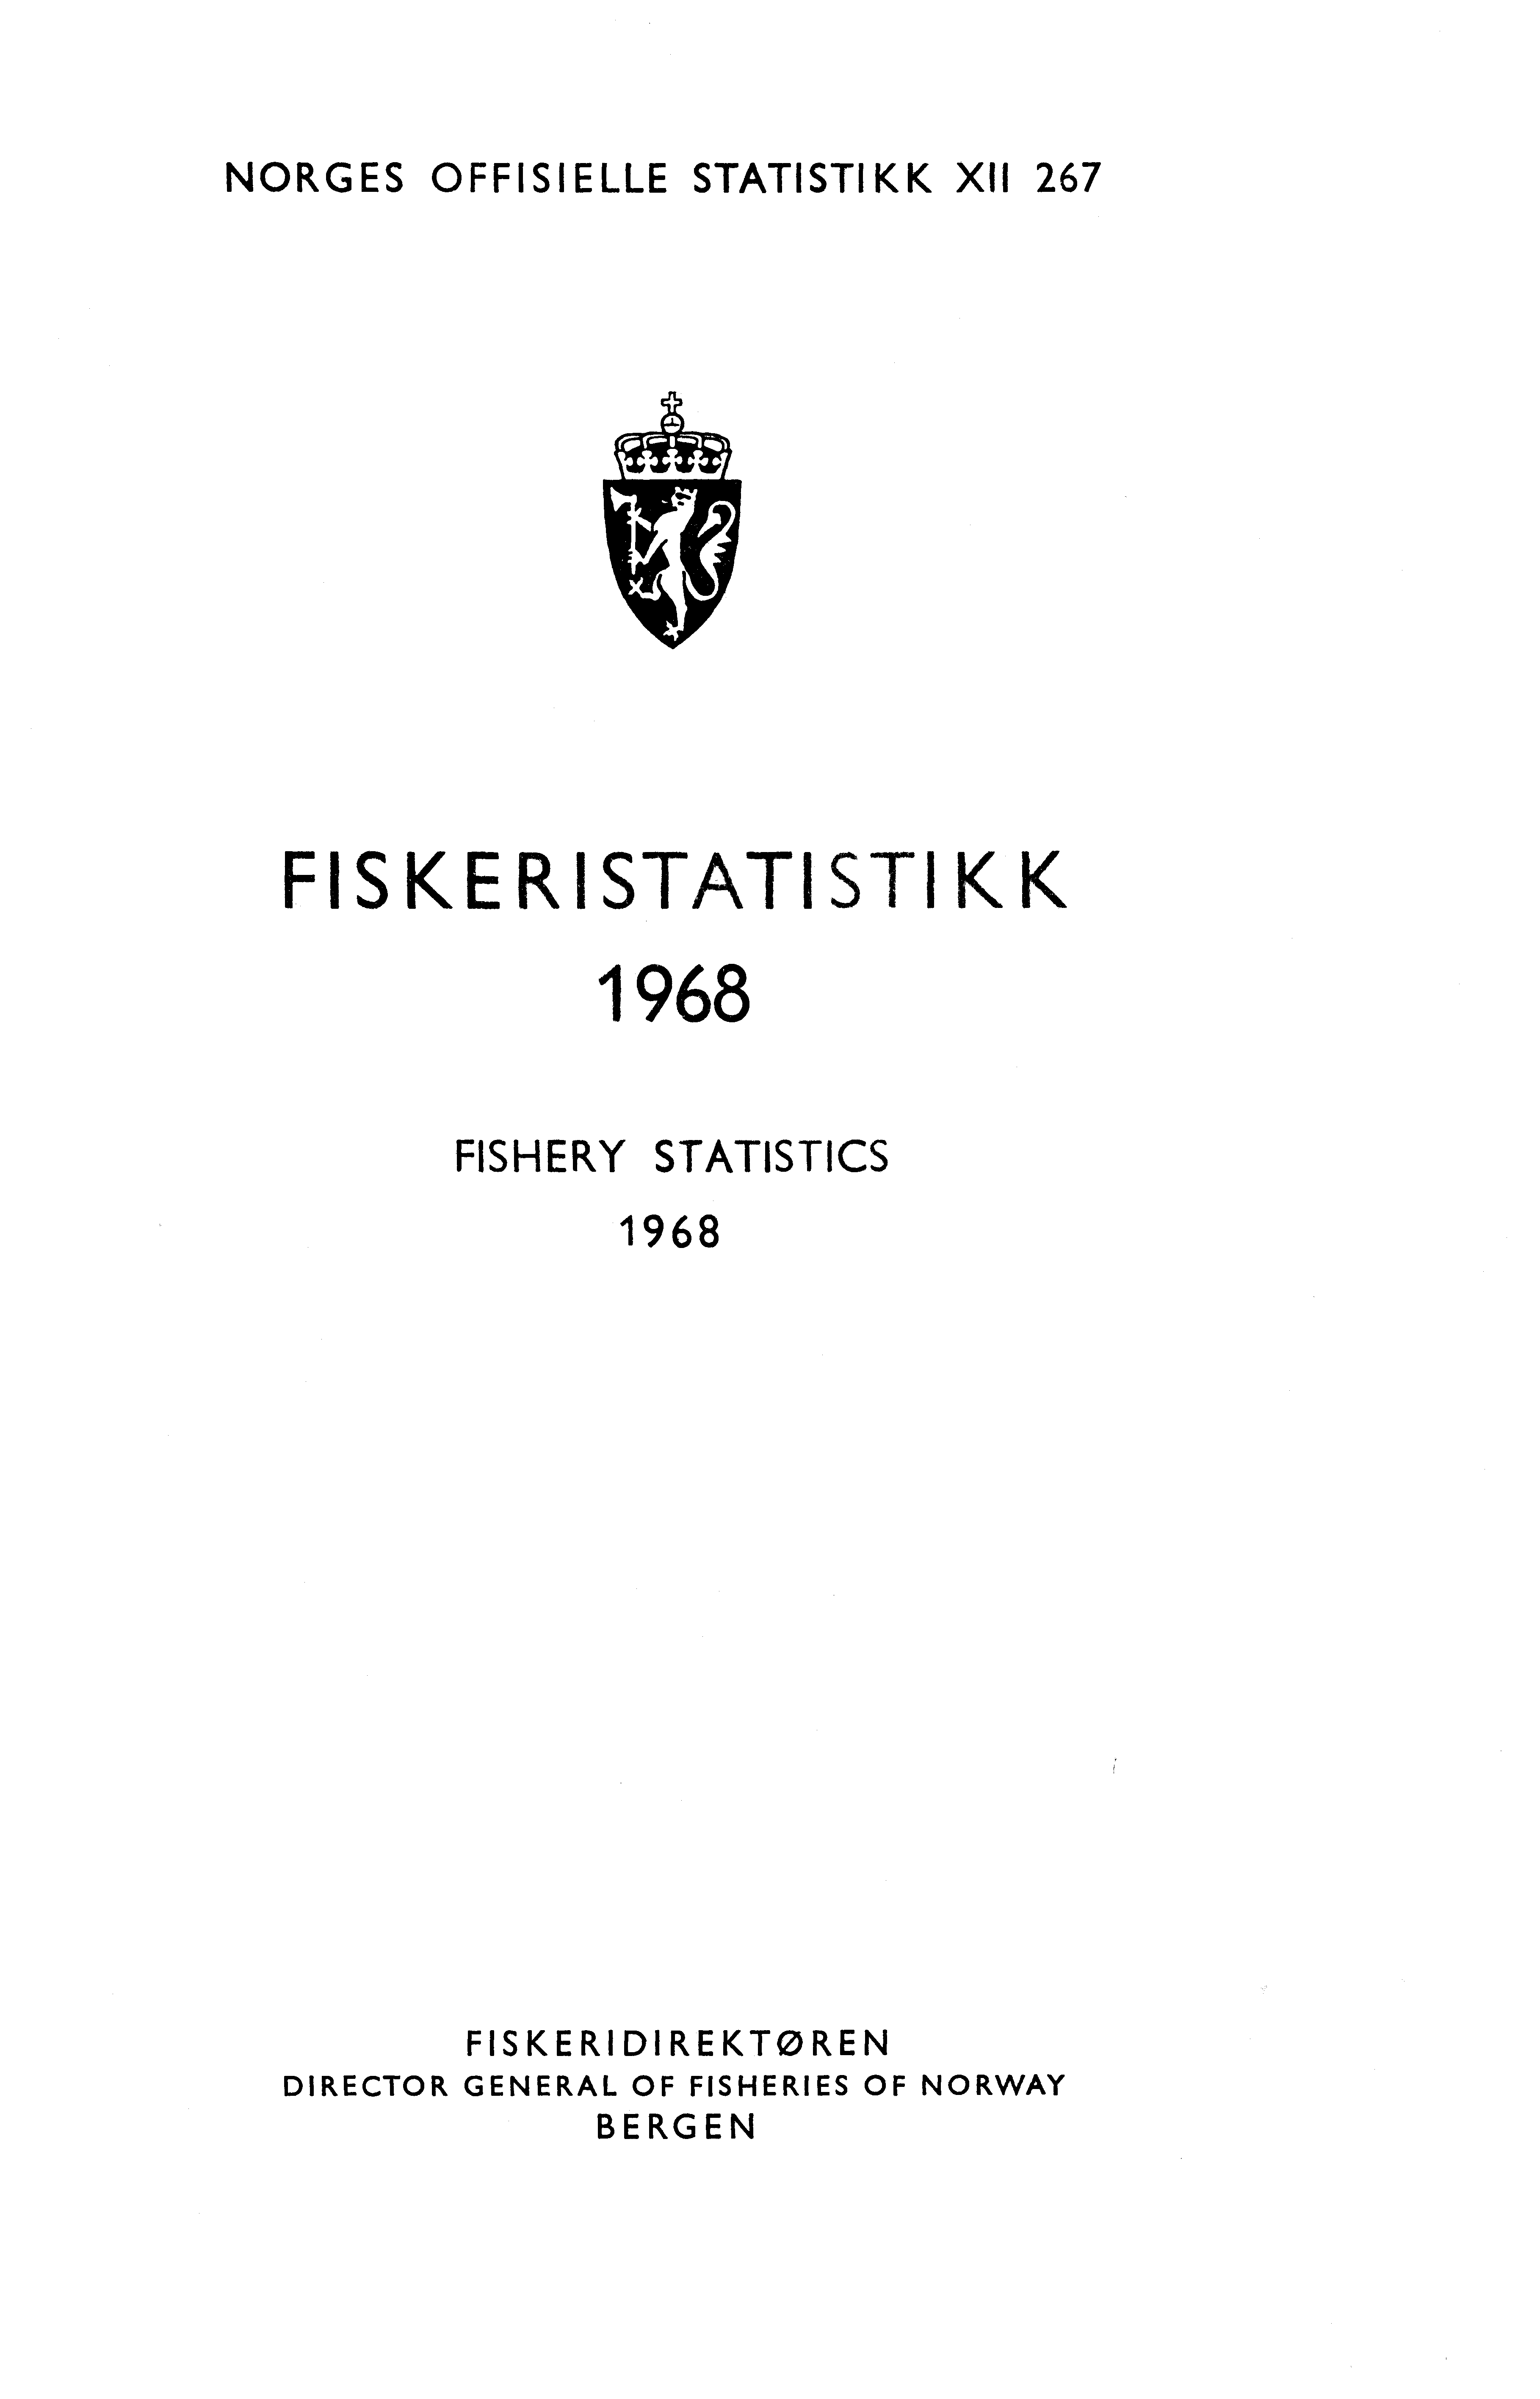 NORGES OFFISIELLE STATISTIKK XII 7 FISKERISTATISTIKK 98 FISHERY